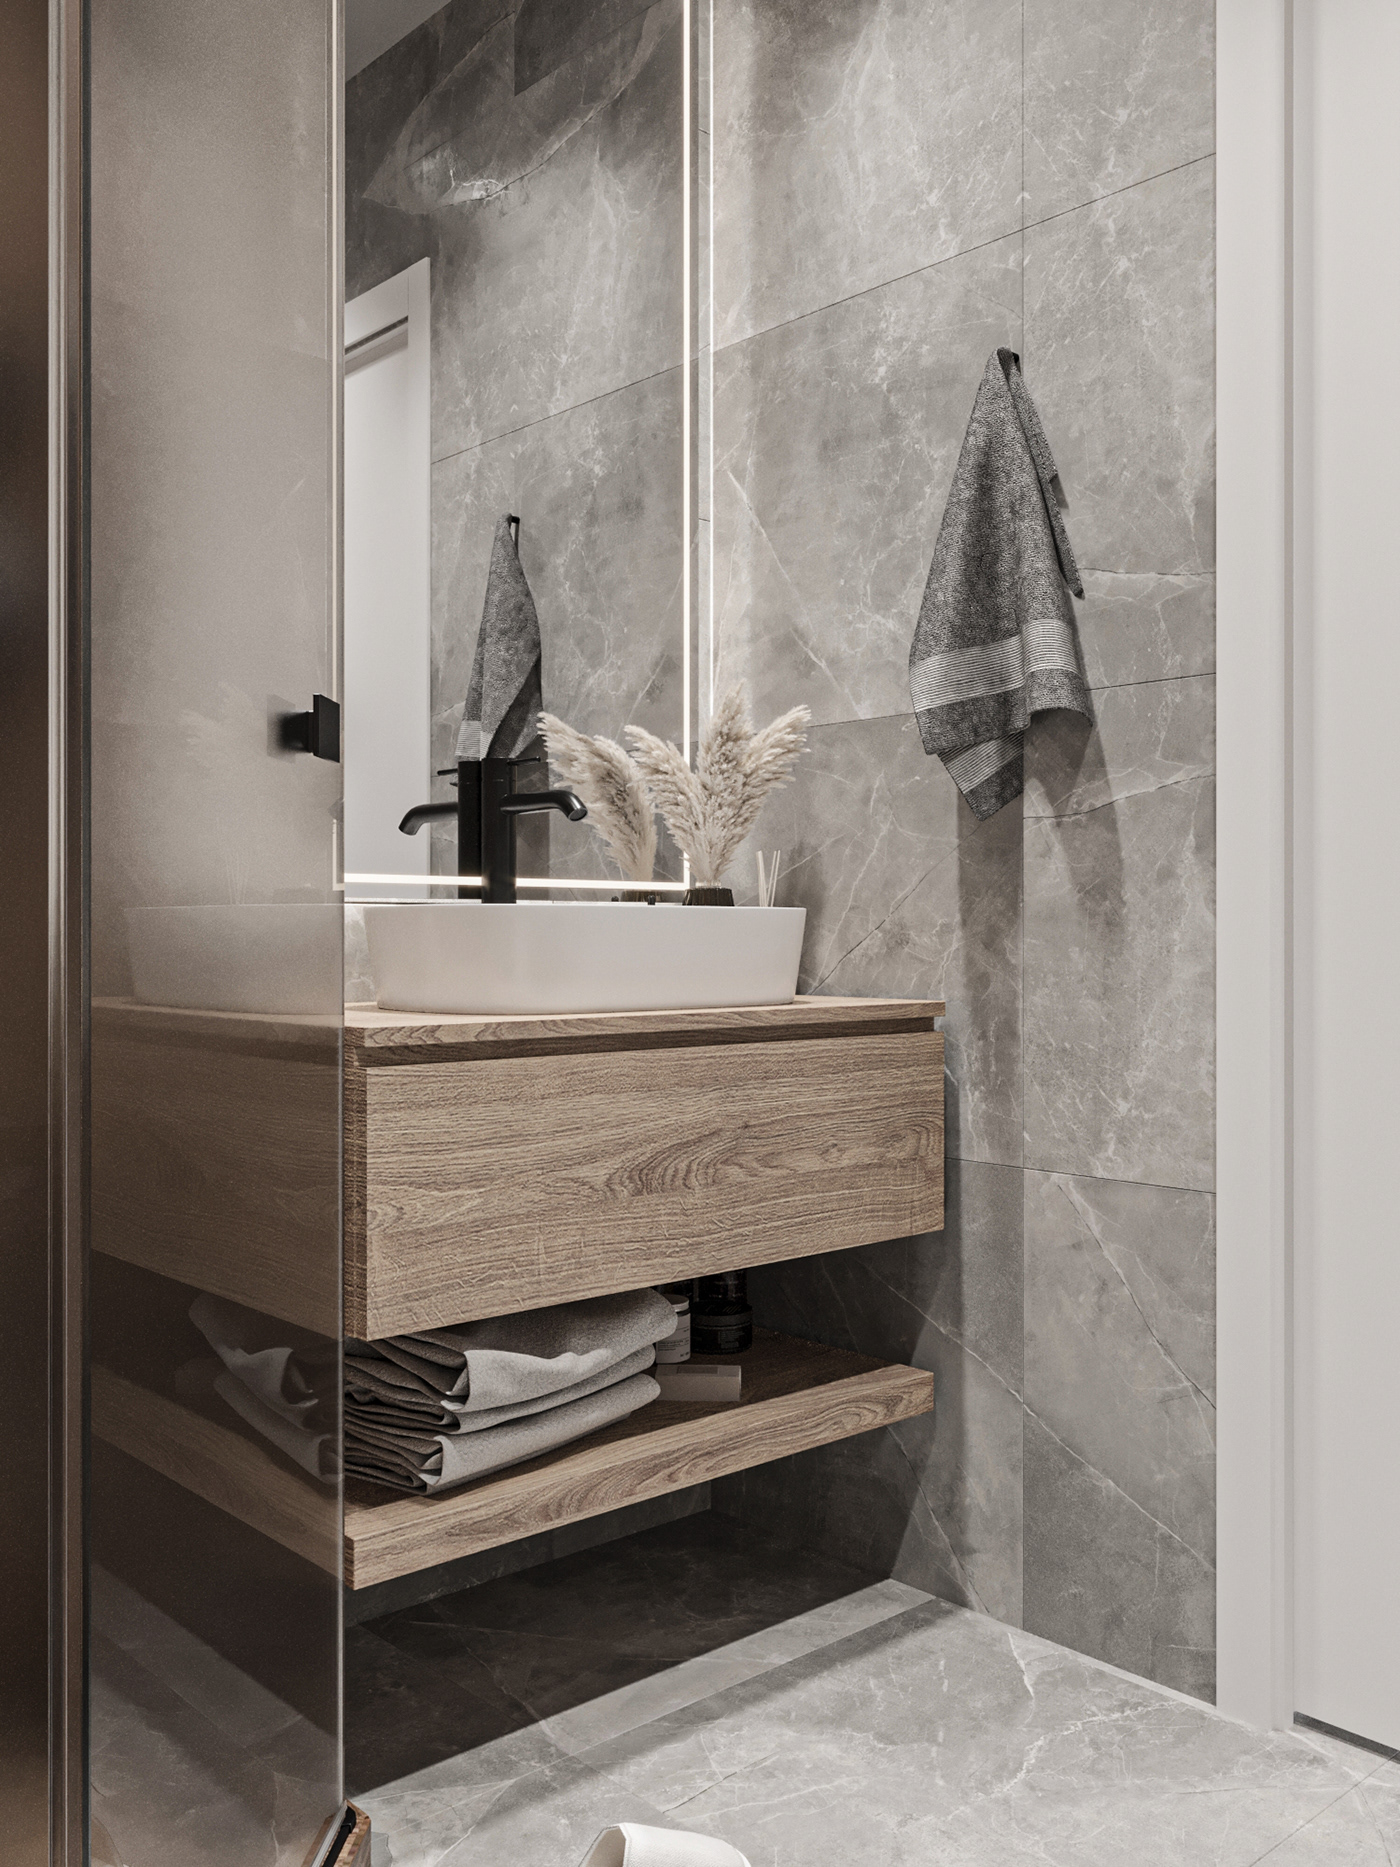 bathroom bathroom design Interior interior design  визуализация Визуализация интерьера дизайн дизайн интерьера интерьер Санузел